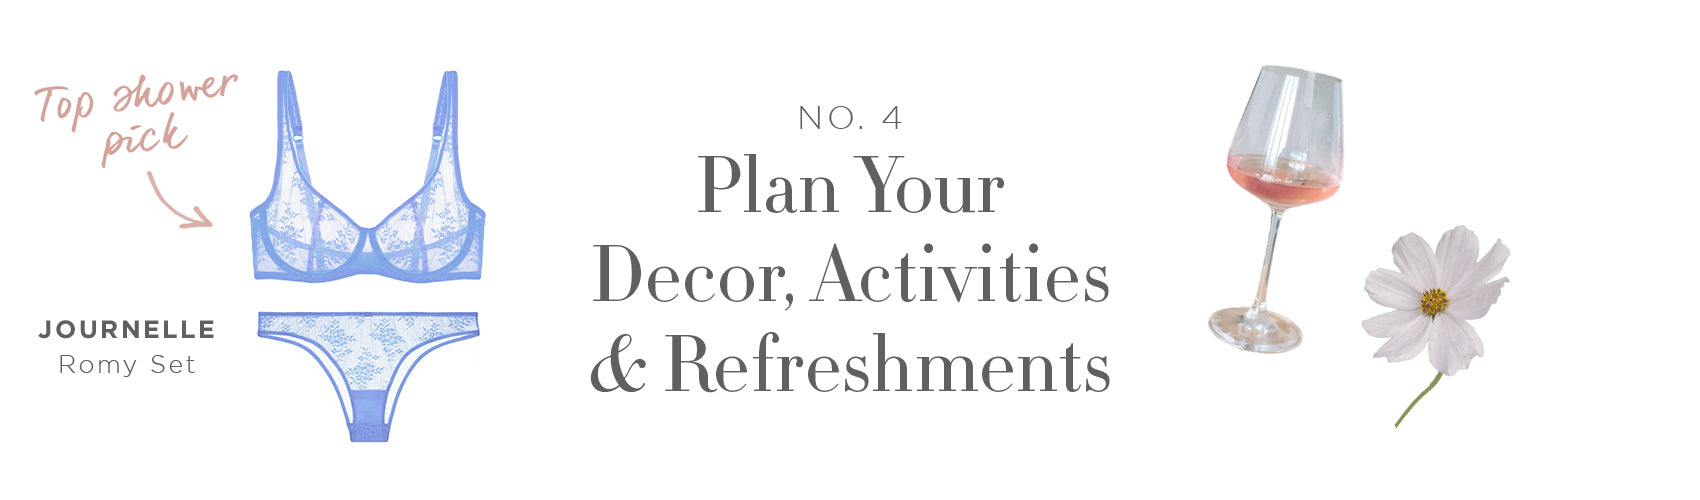 Plan Your Decor, Activities & Refreshments